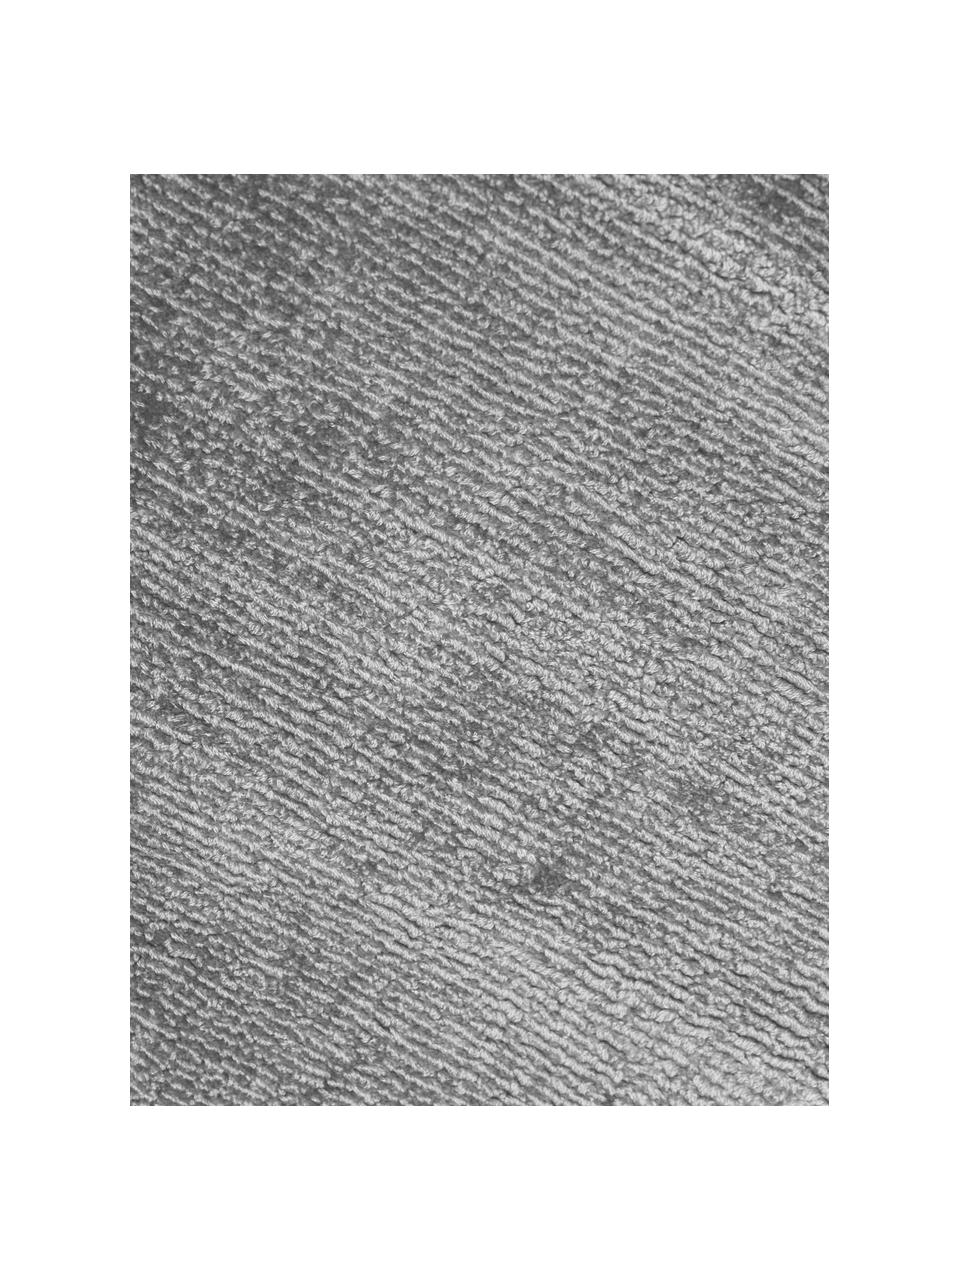 Handgewebter Viskoseläufer Jane in Grau, Flor: 100% Viskose, Grau, B 80 x L 200 cm